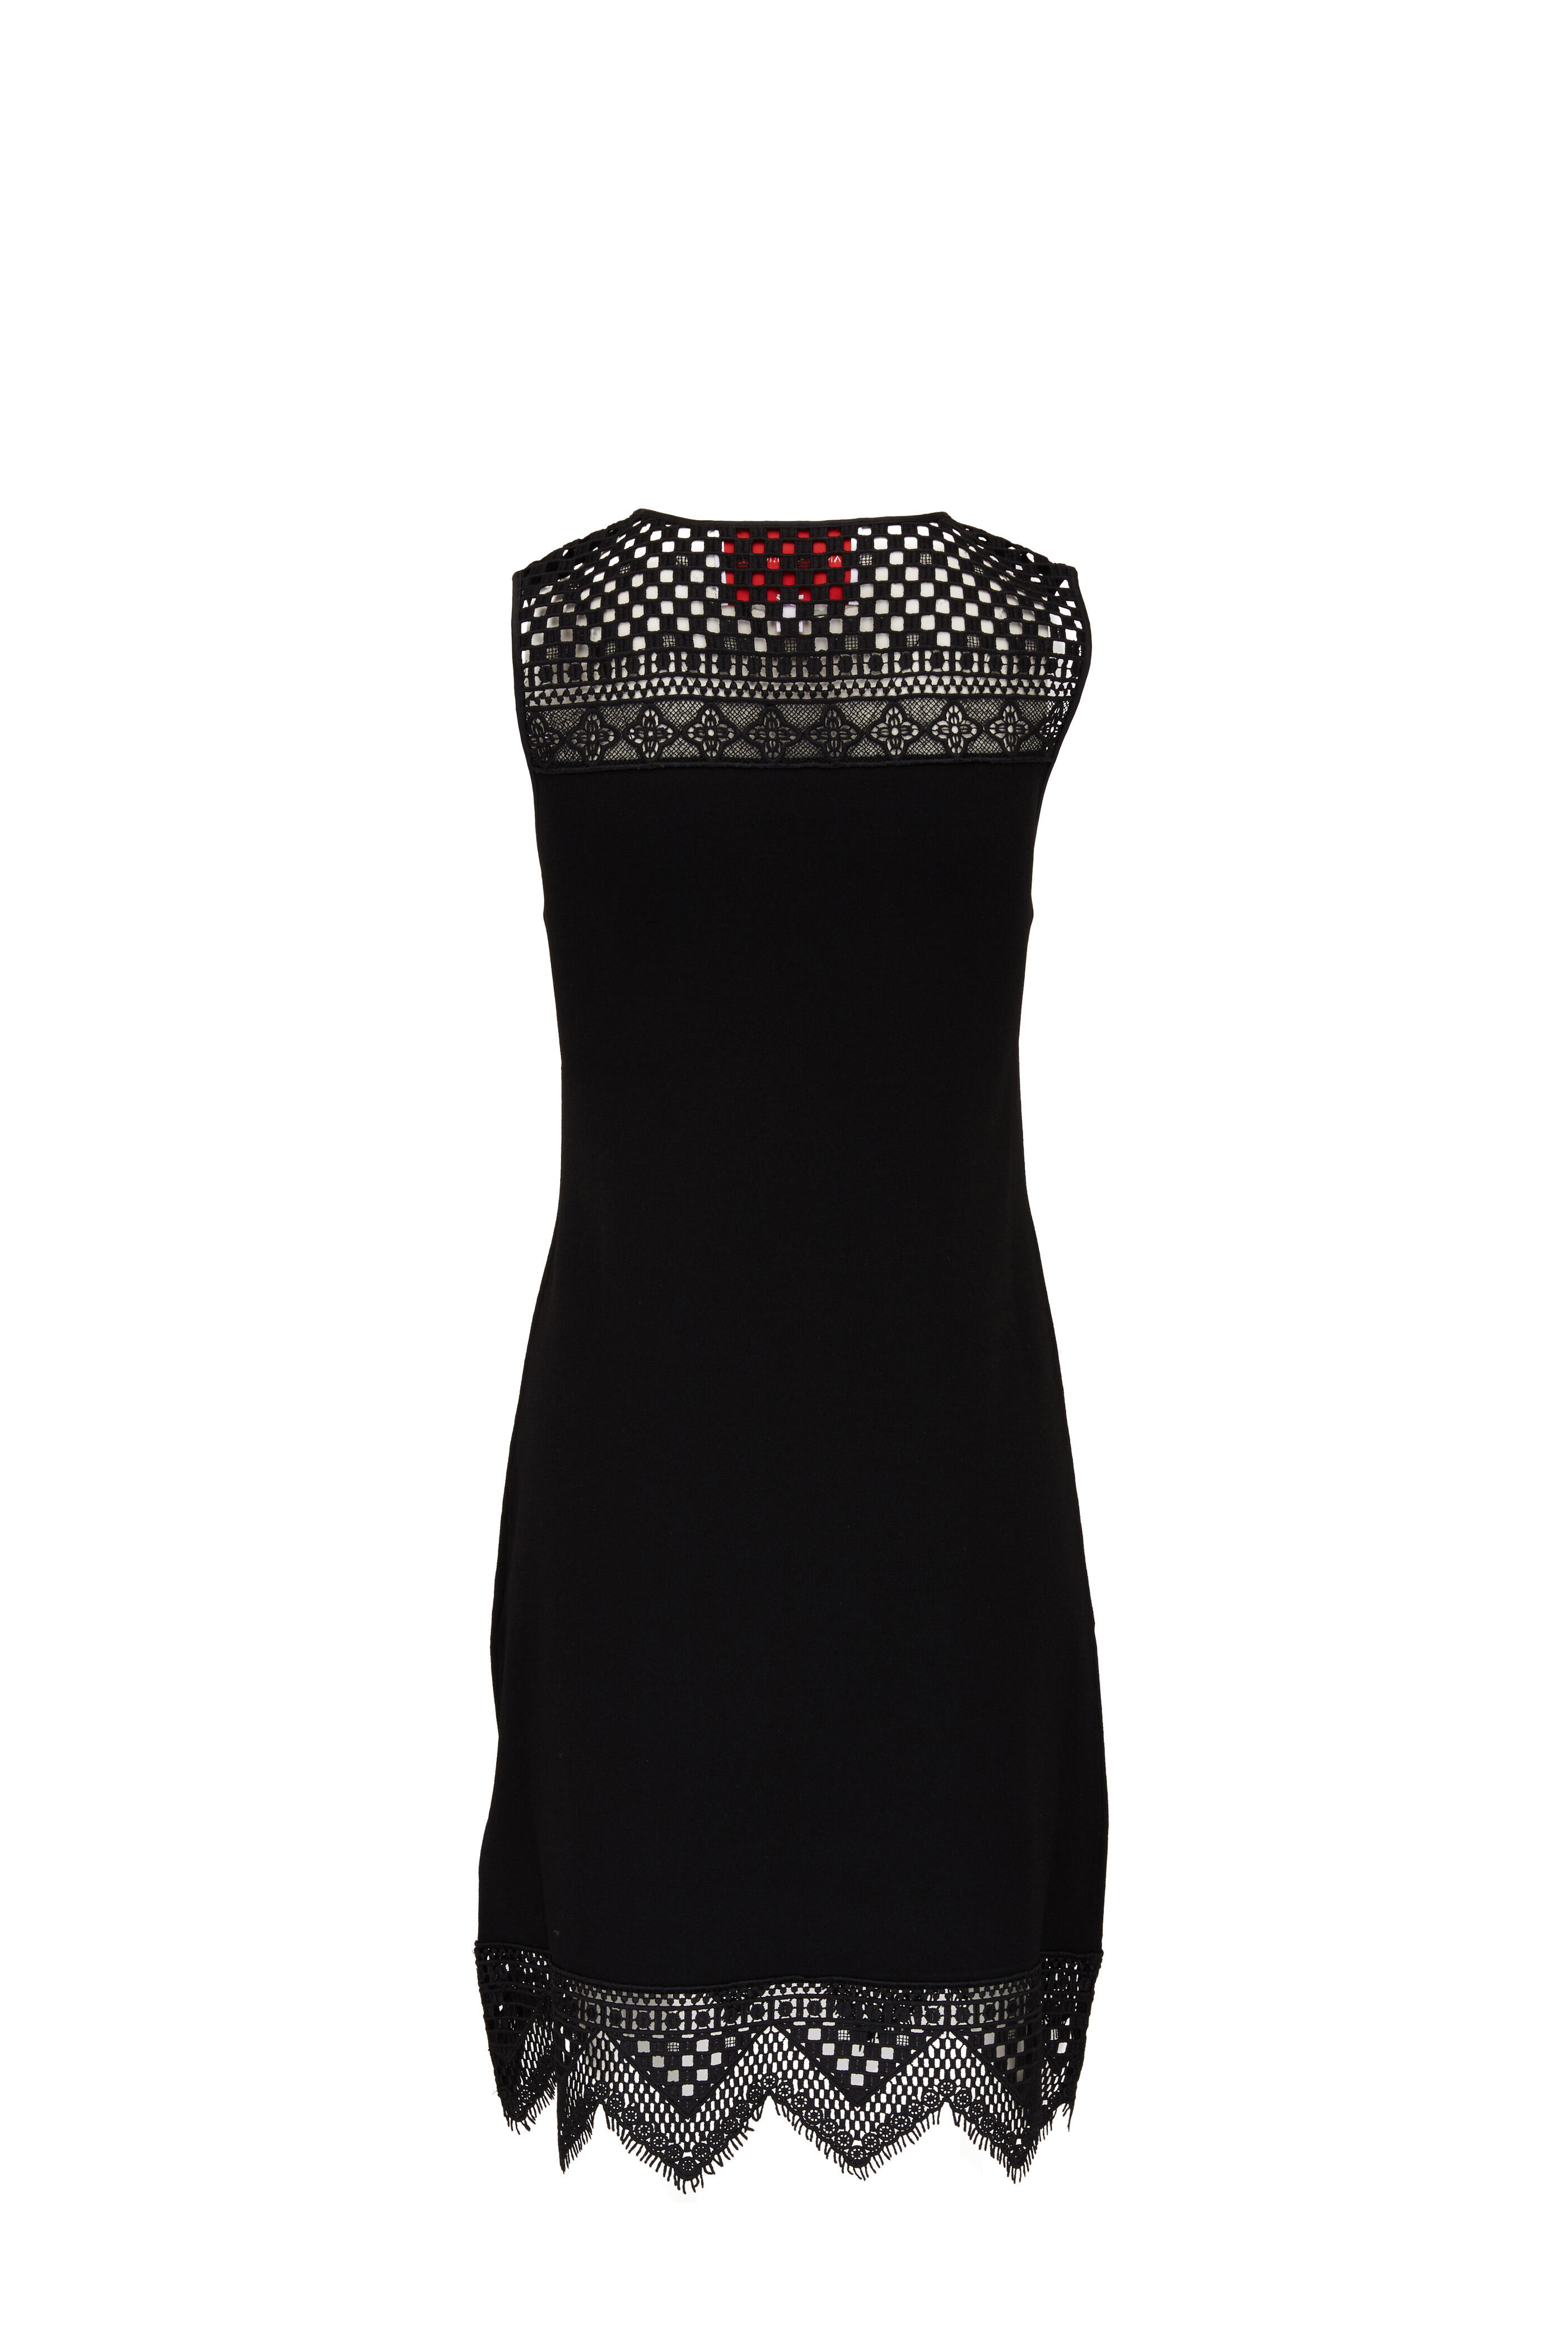 Carolina Herrera - Black Knit Guipure Lace Trim Shift Dress